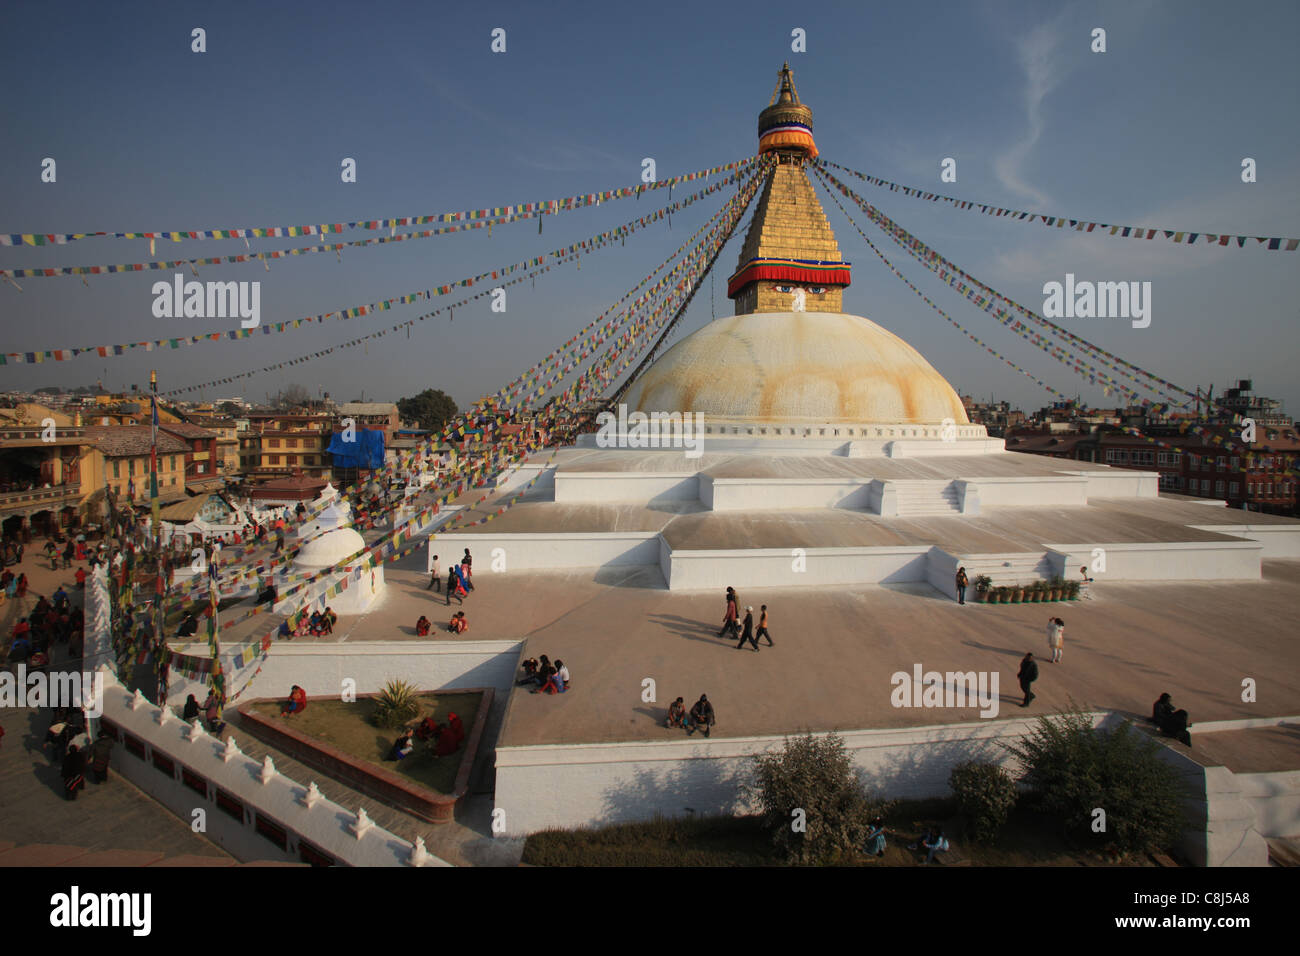 Stupa Boudhanath, Boudha, Kathmandu, Nepal, Asia, religione, buddismo buddisti, pellegrino, luogo sacro, destinazione sacra, smentisce Foto Stock